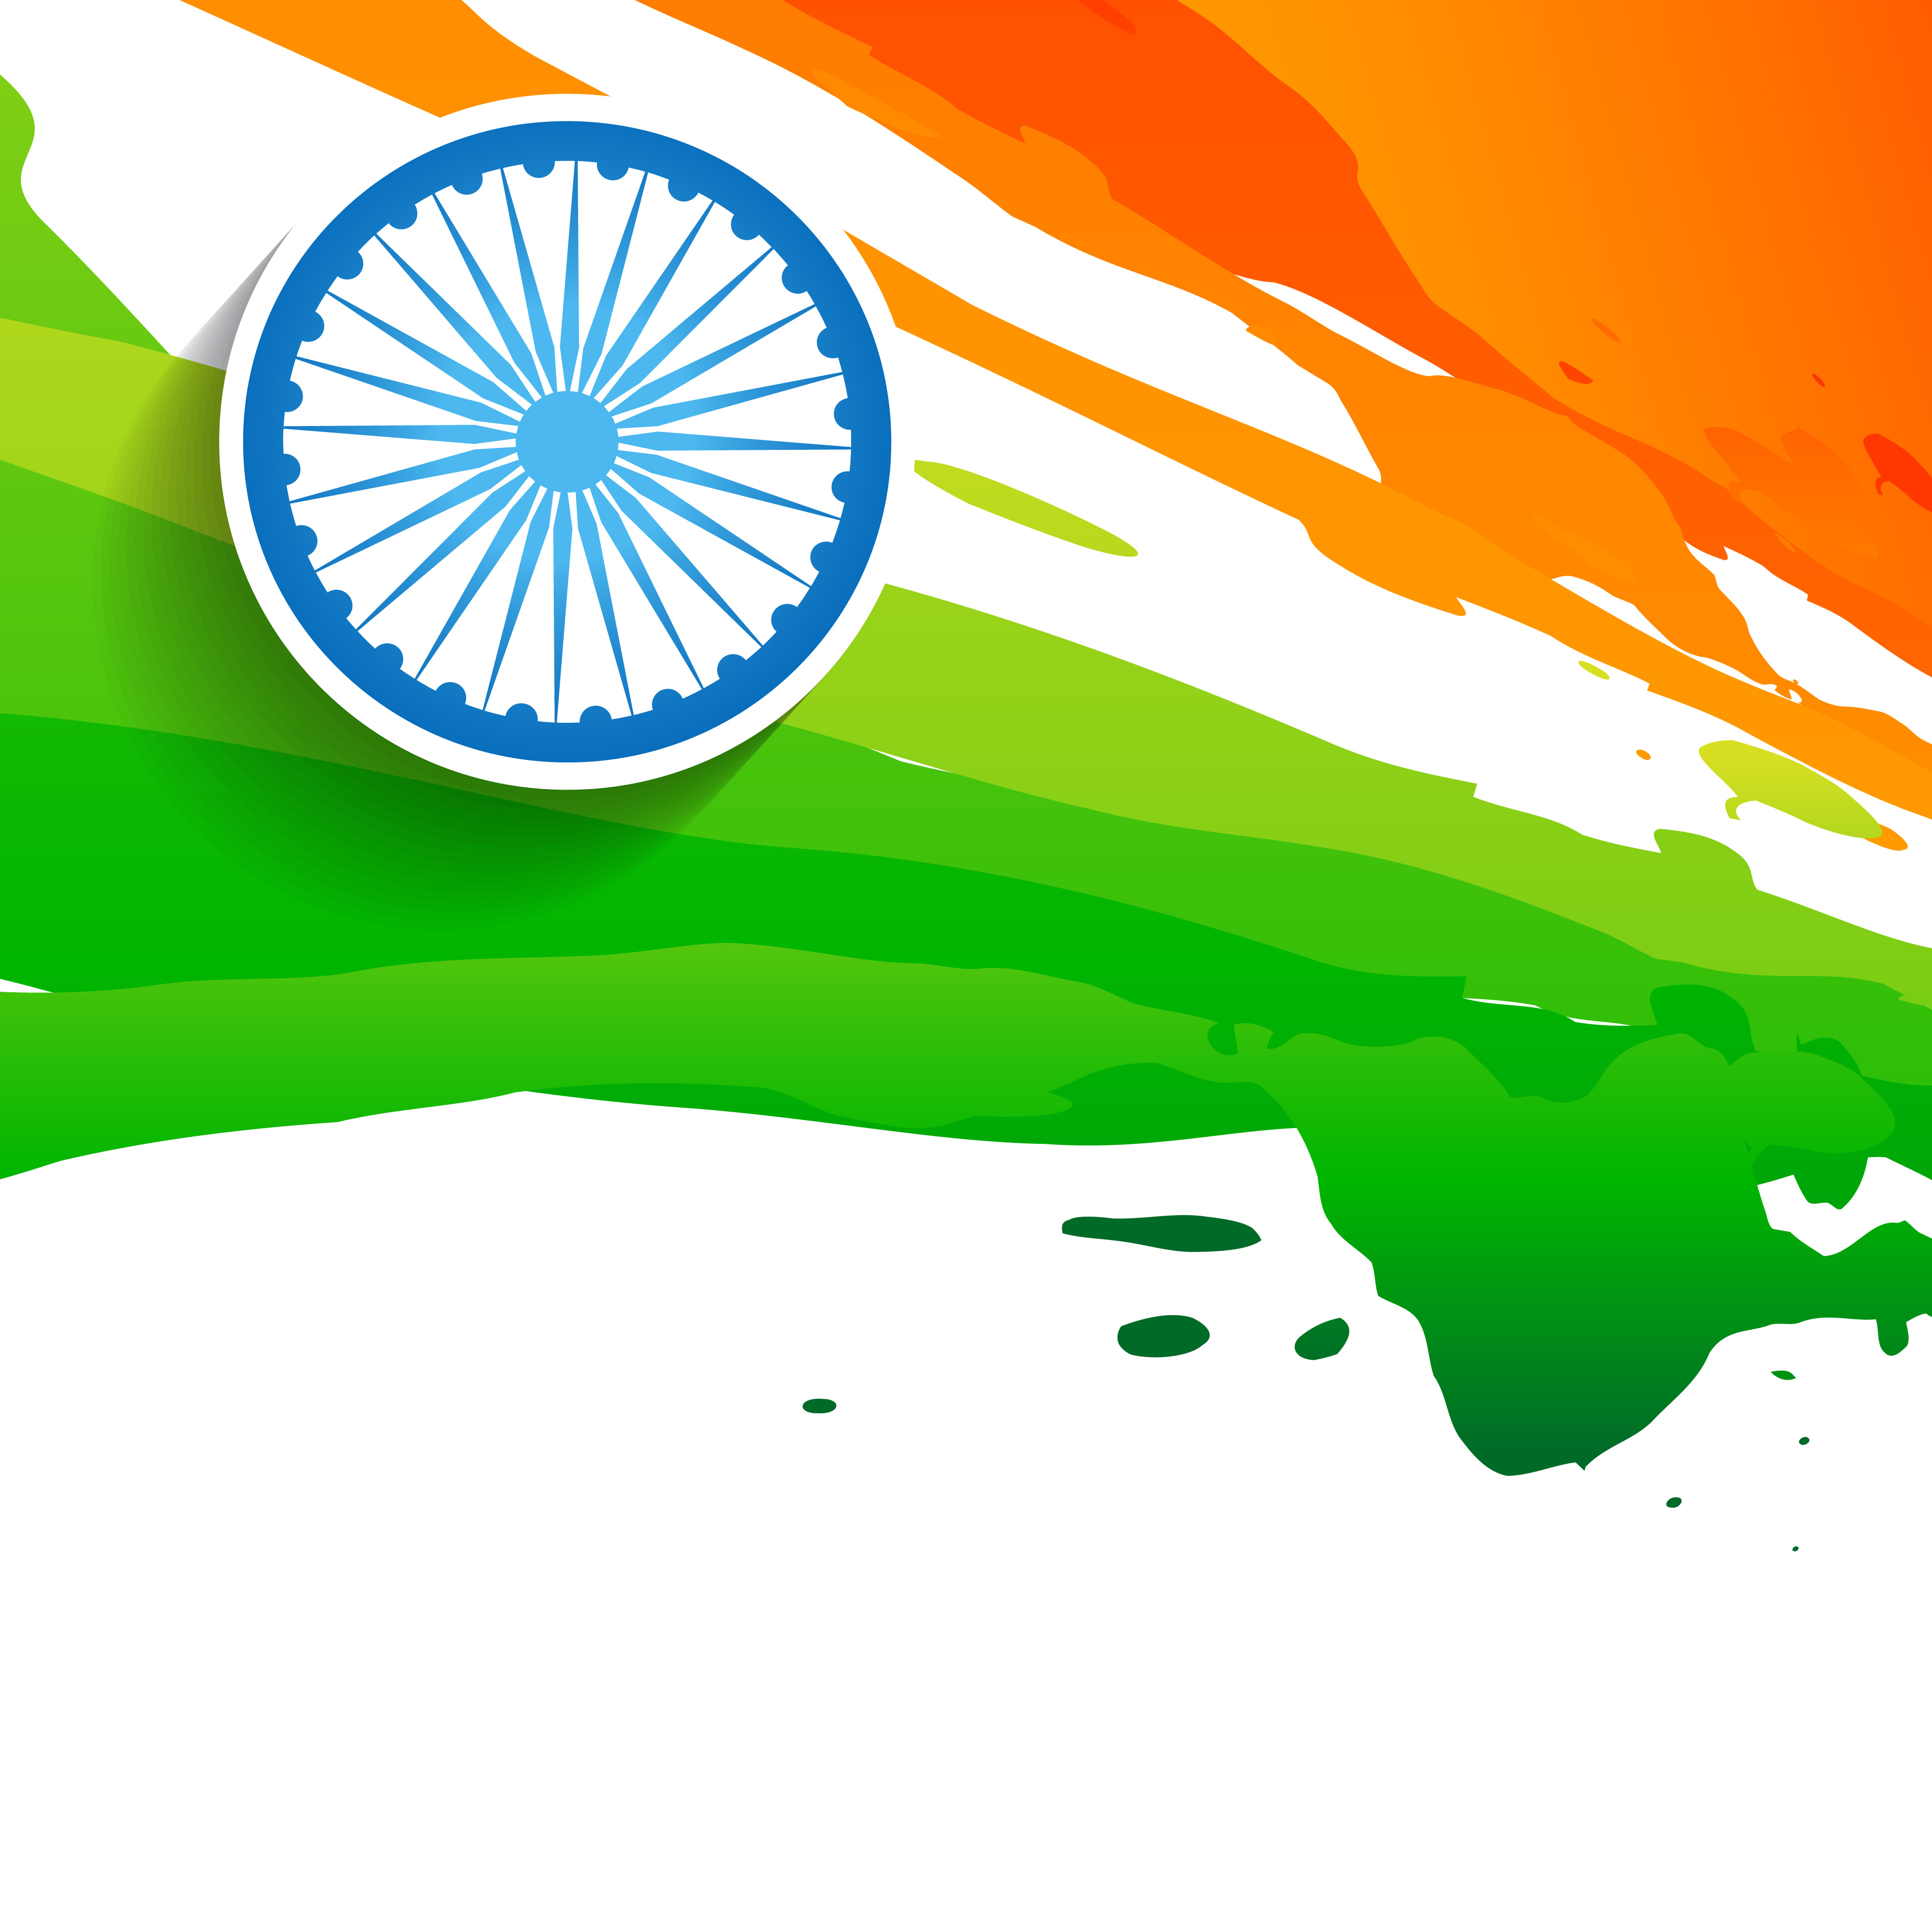 Download indian flag design - Download Free Vectors, Clipart ...